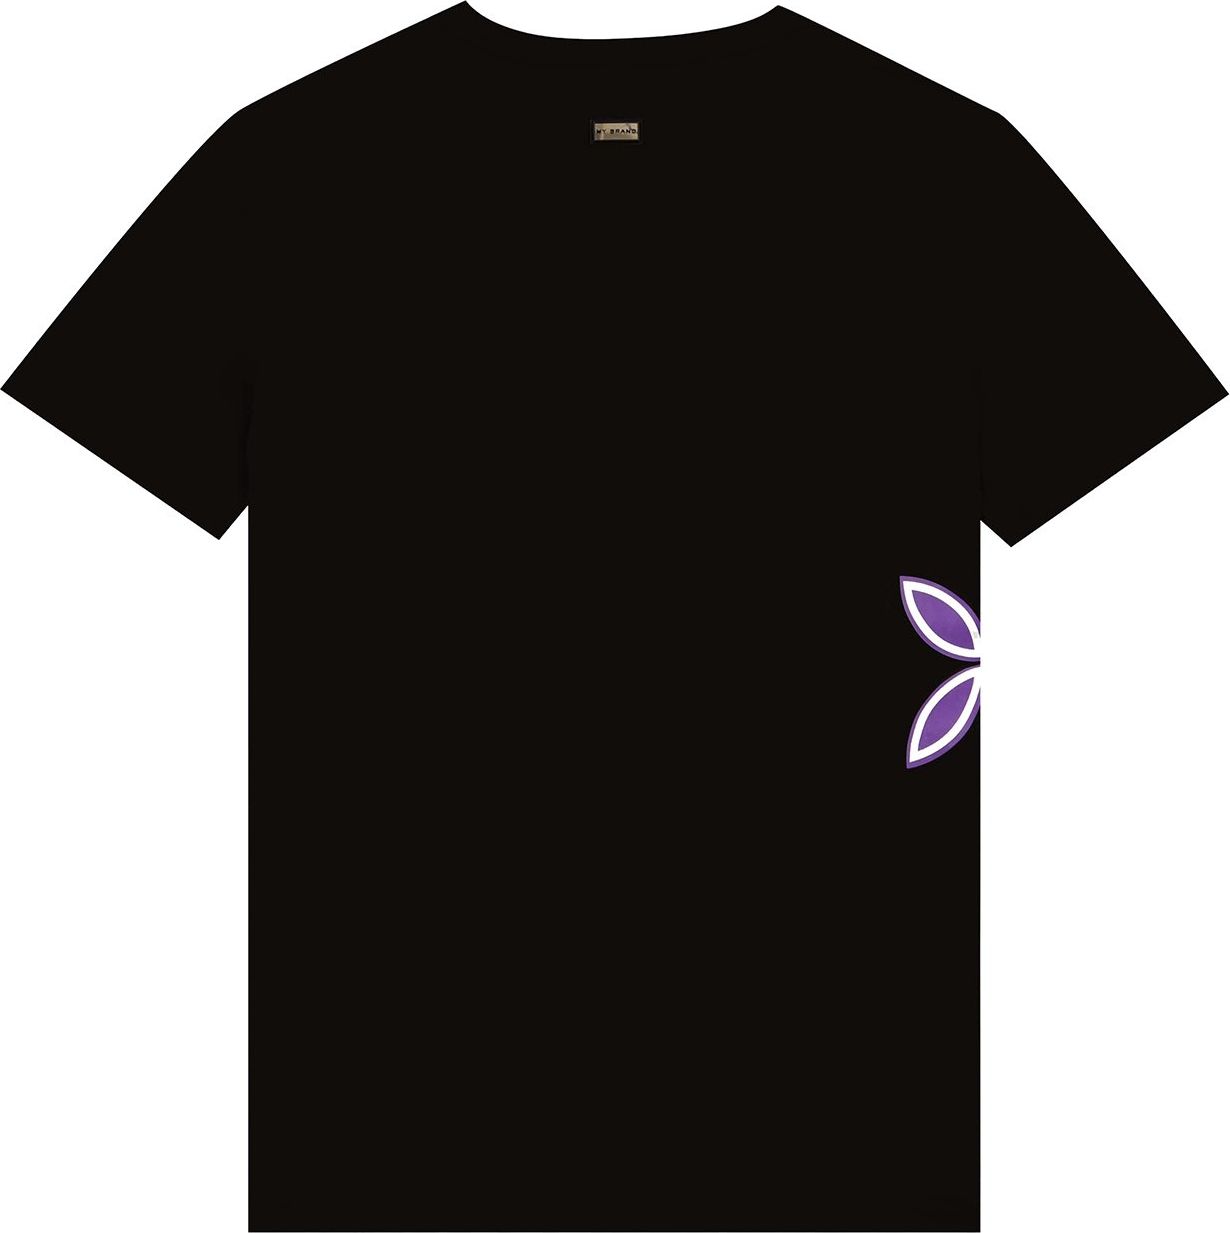 My Brand Mb creators t shirt Zwart